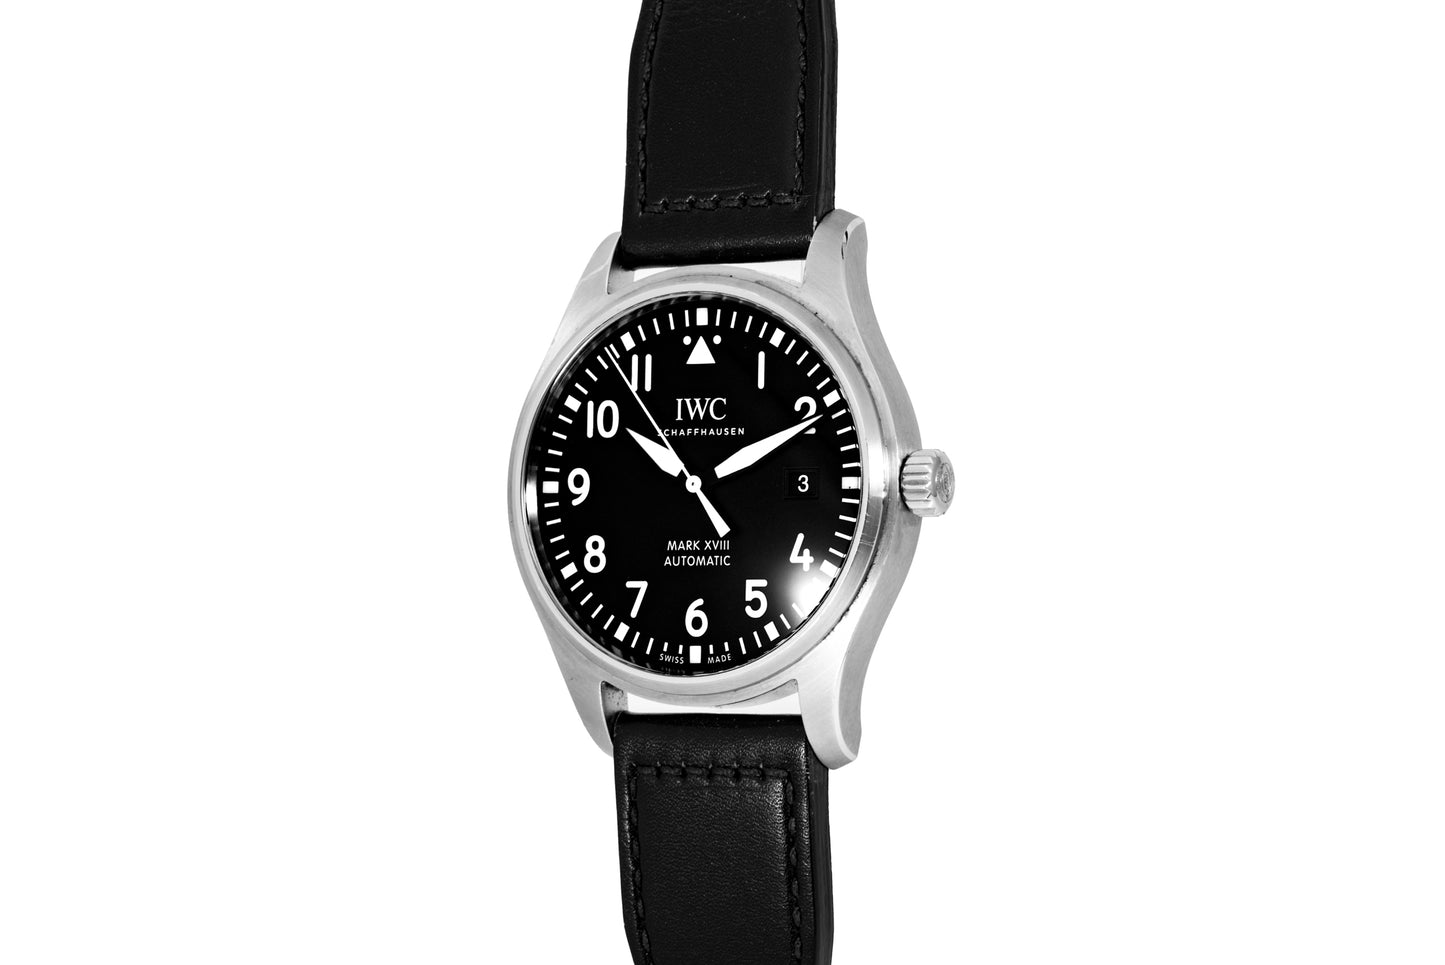 IWC Pilot's Watch Mark XVIII